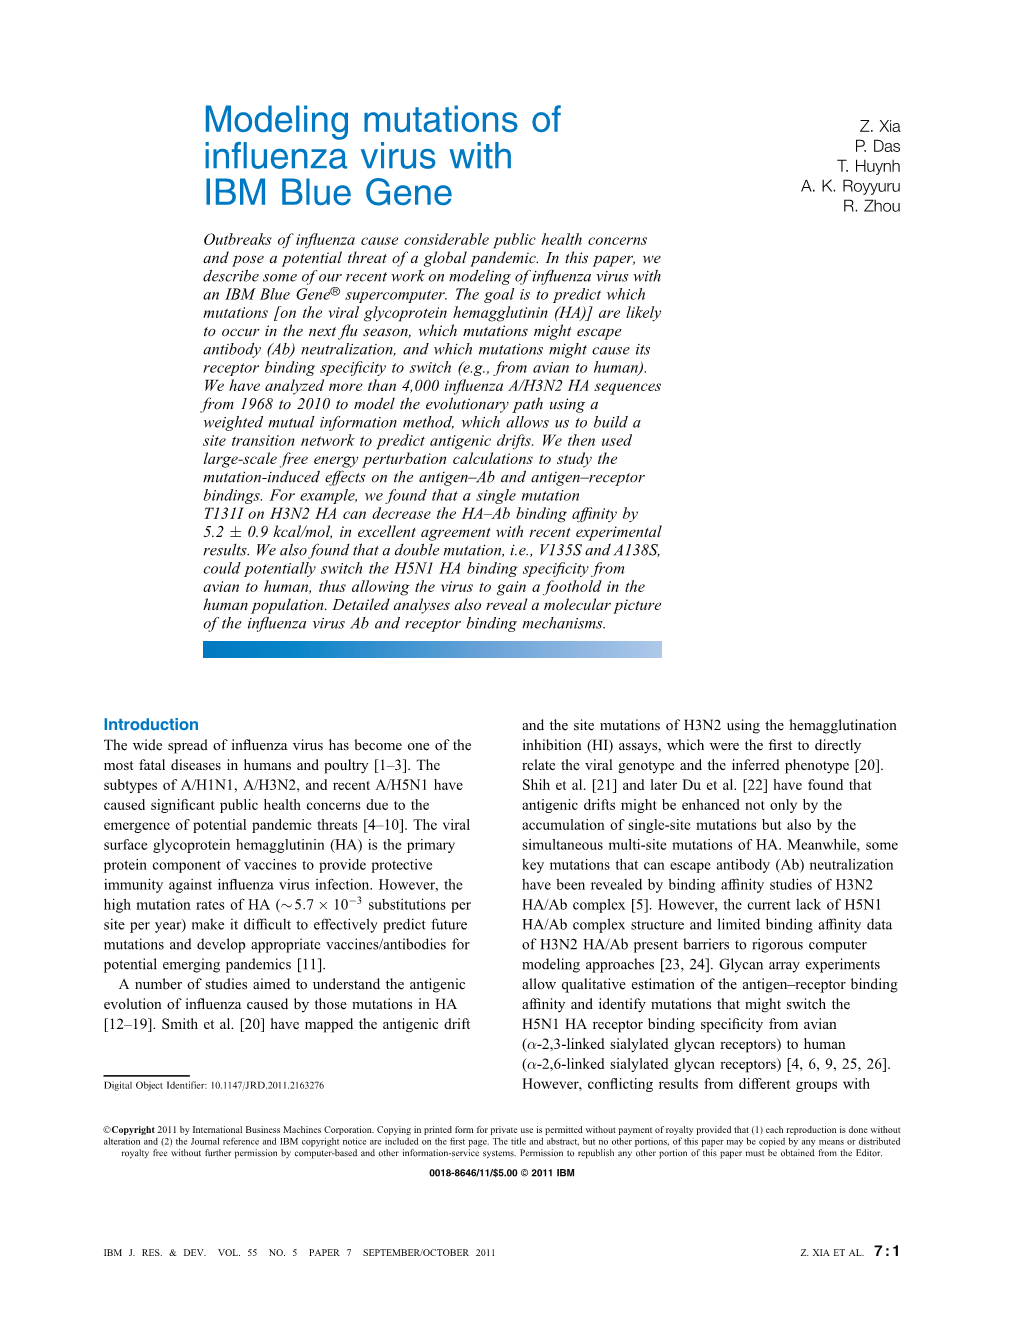 Modeling Mutations of Influenza Virus with IBM Blue Gene